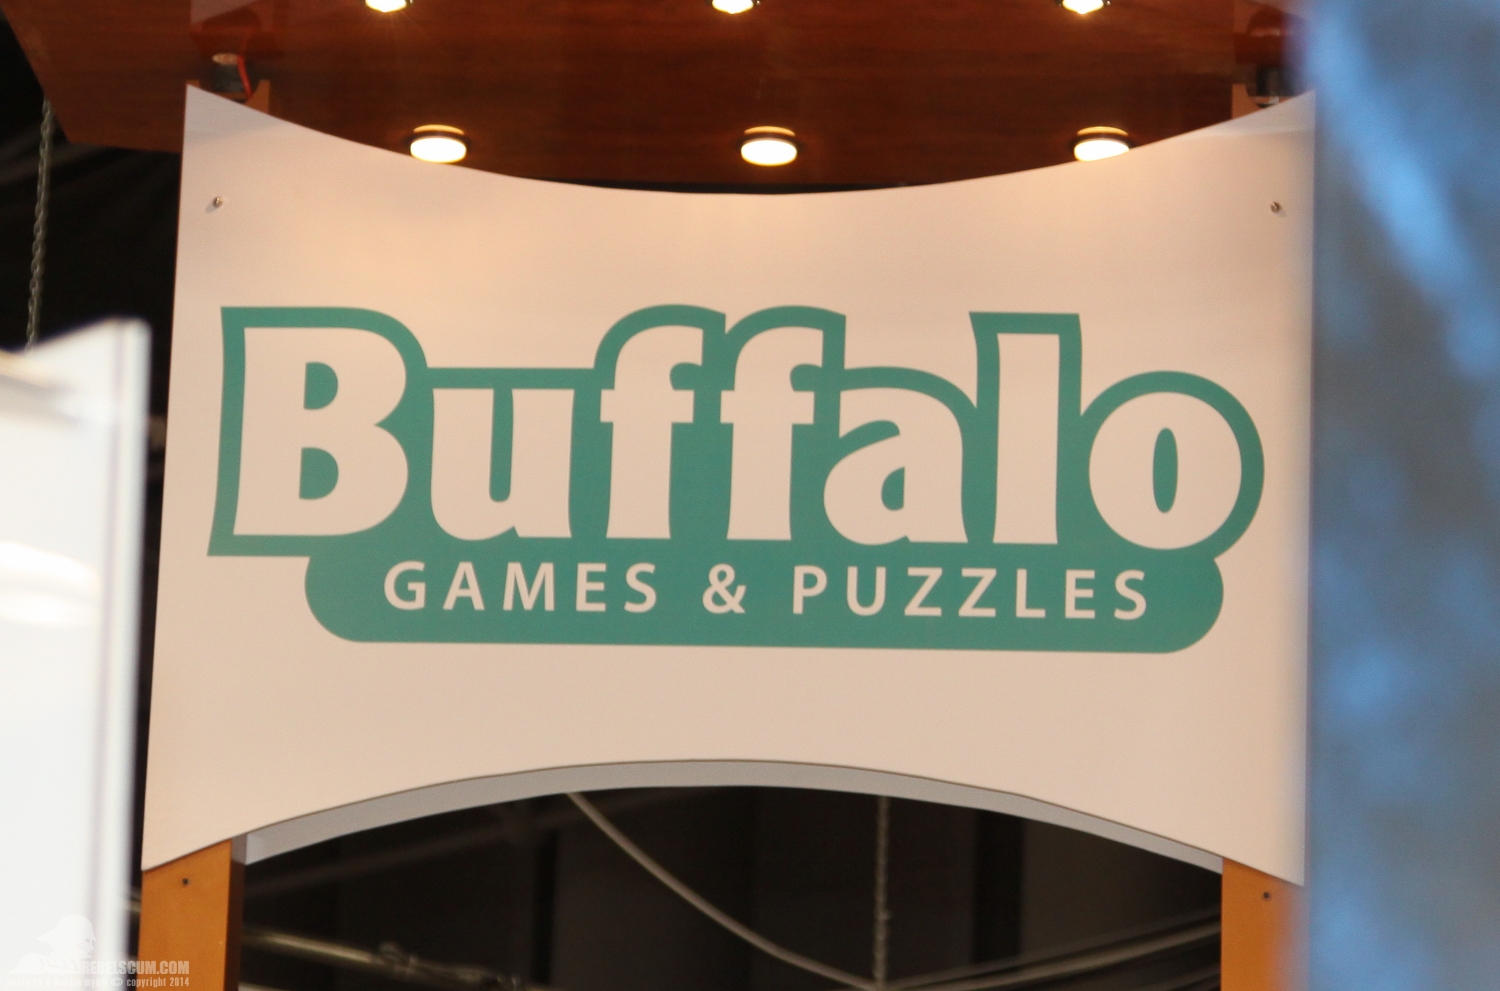 Toy-Fair-2014-Buffalo-Games-Star-Wars-Puzzles-001.jpg